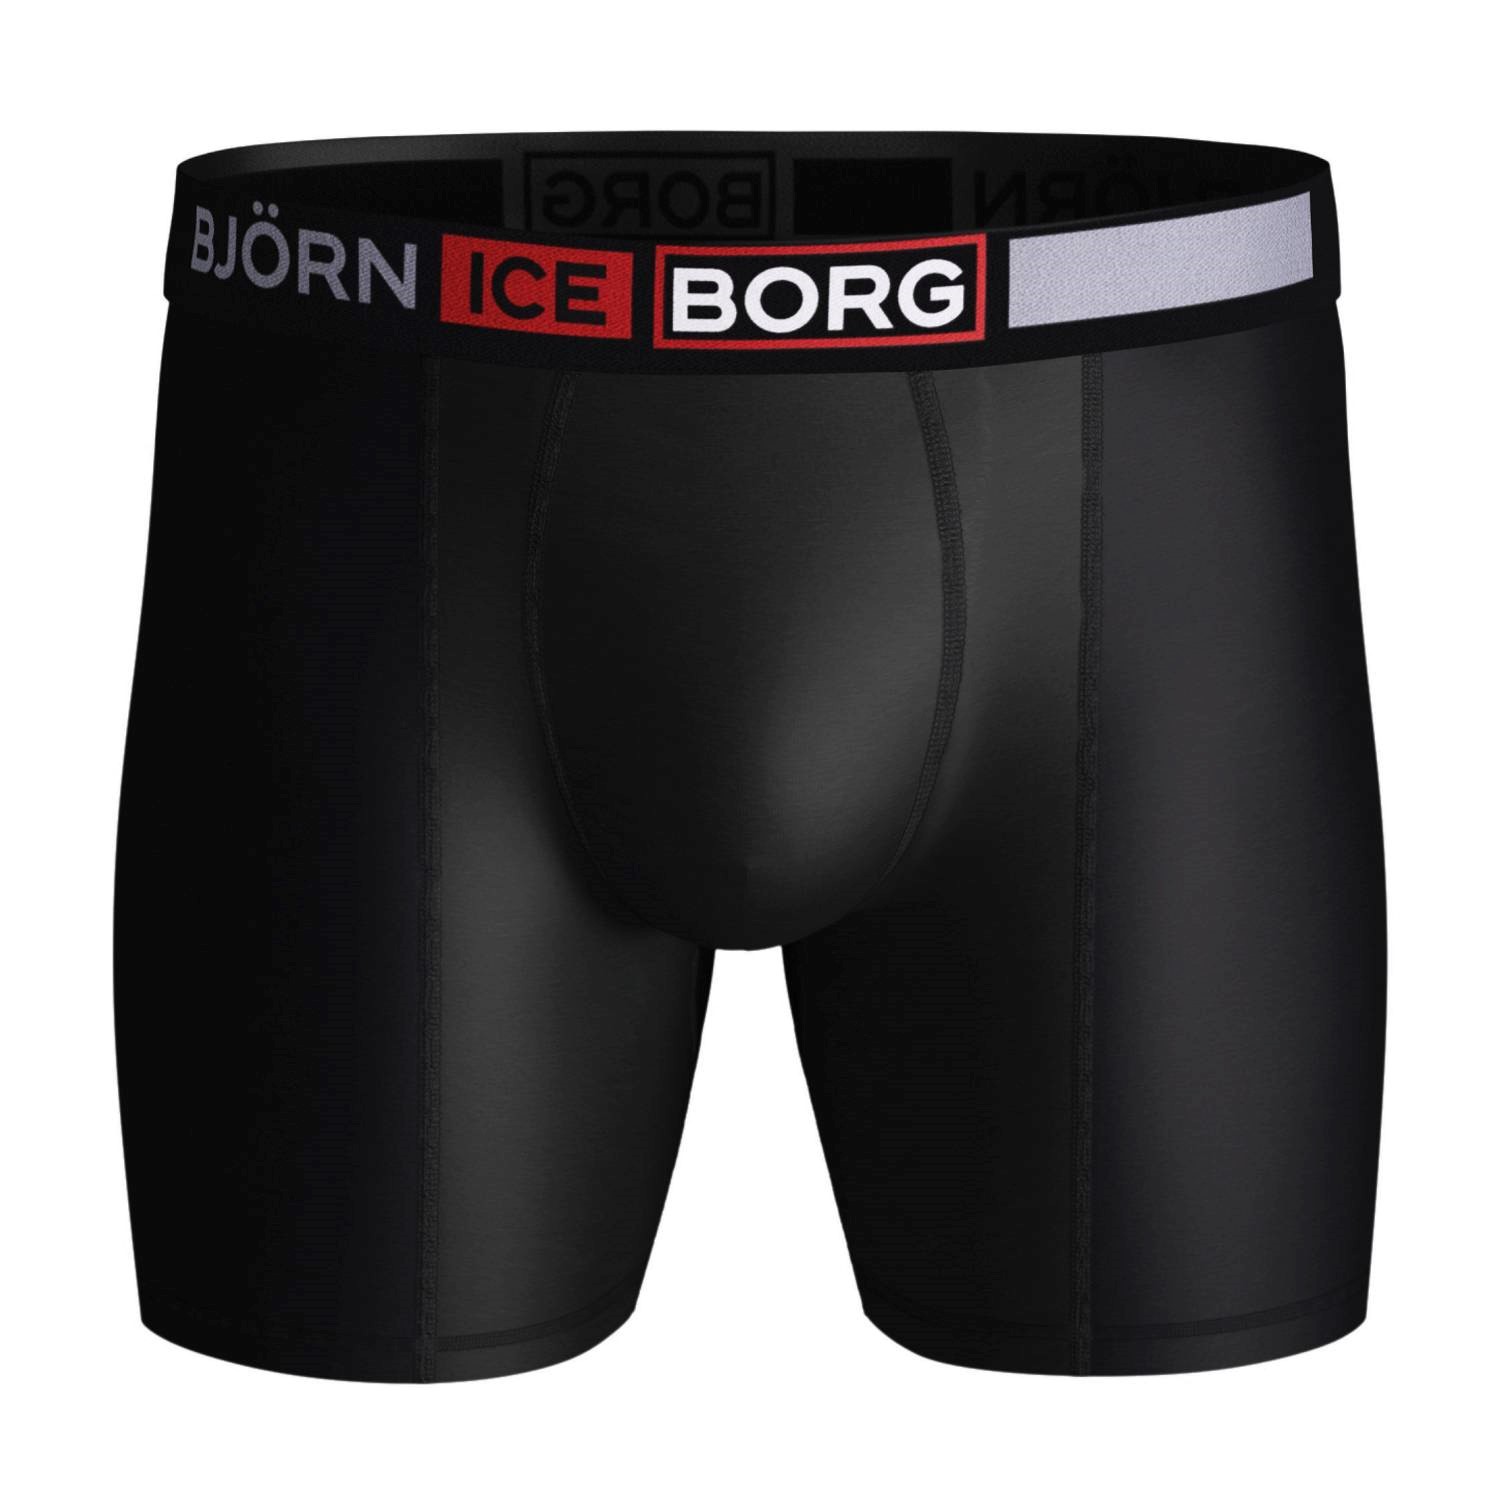 Björn Borg Performance Ice Shorts